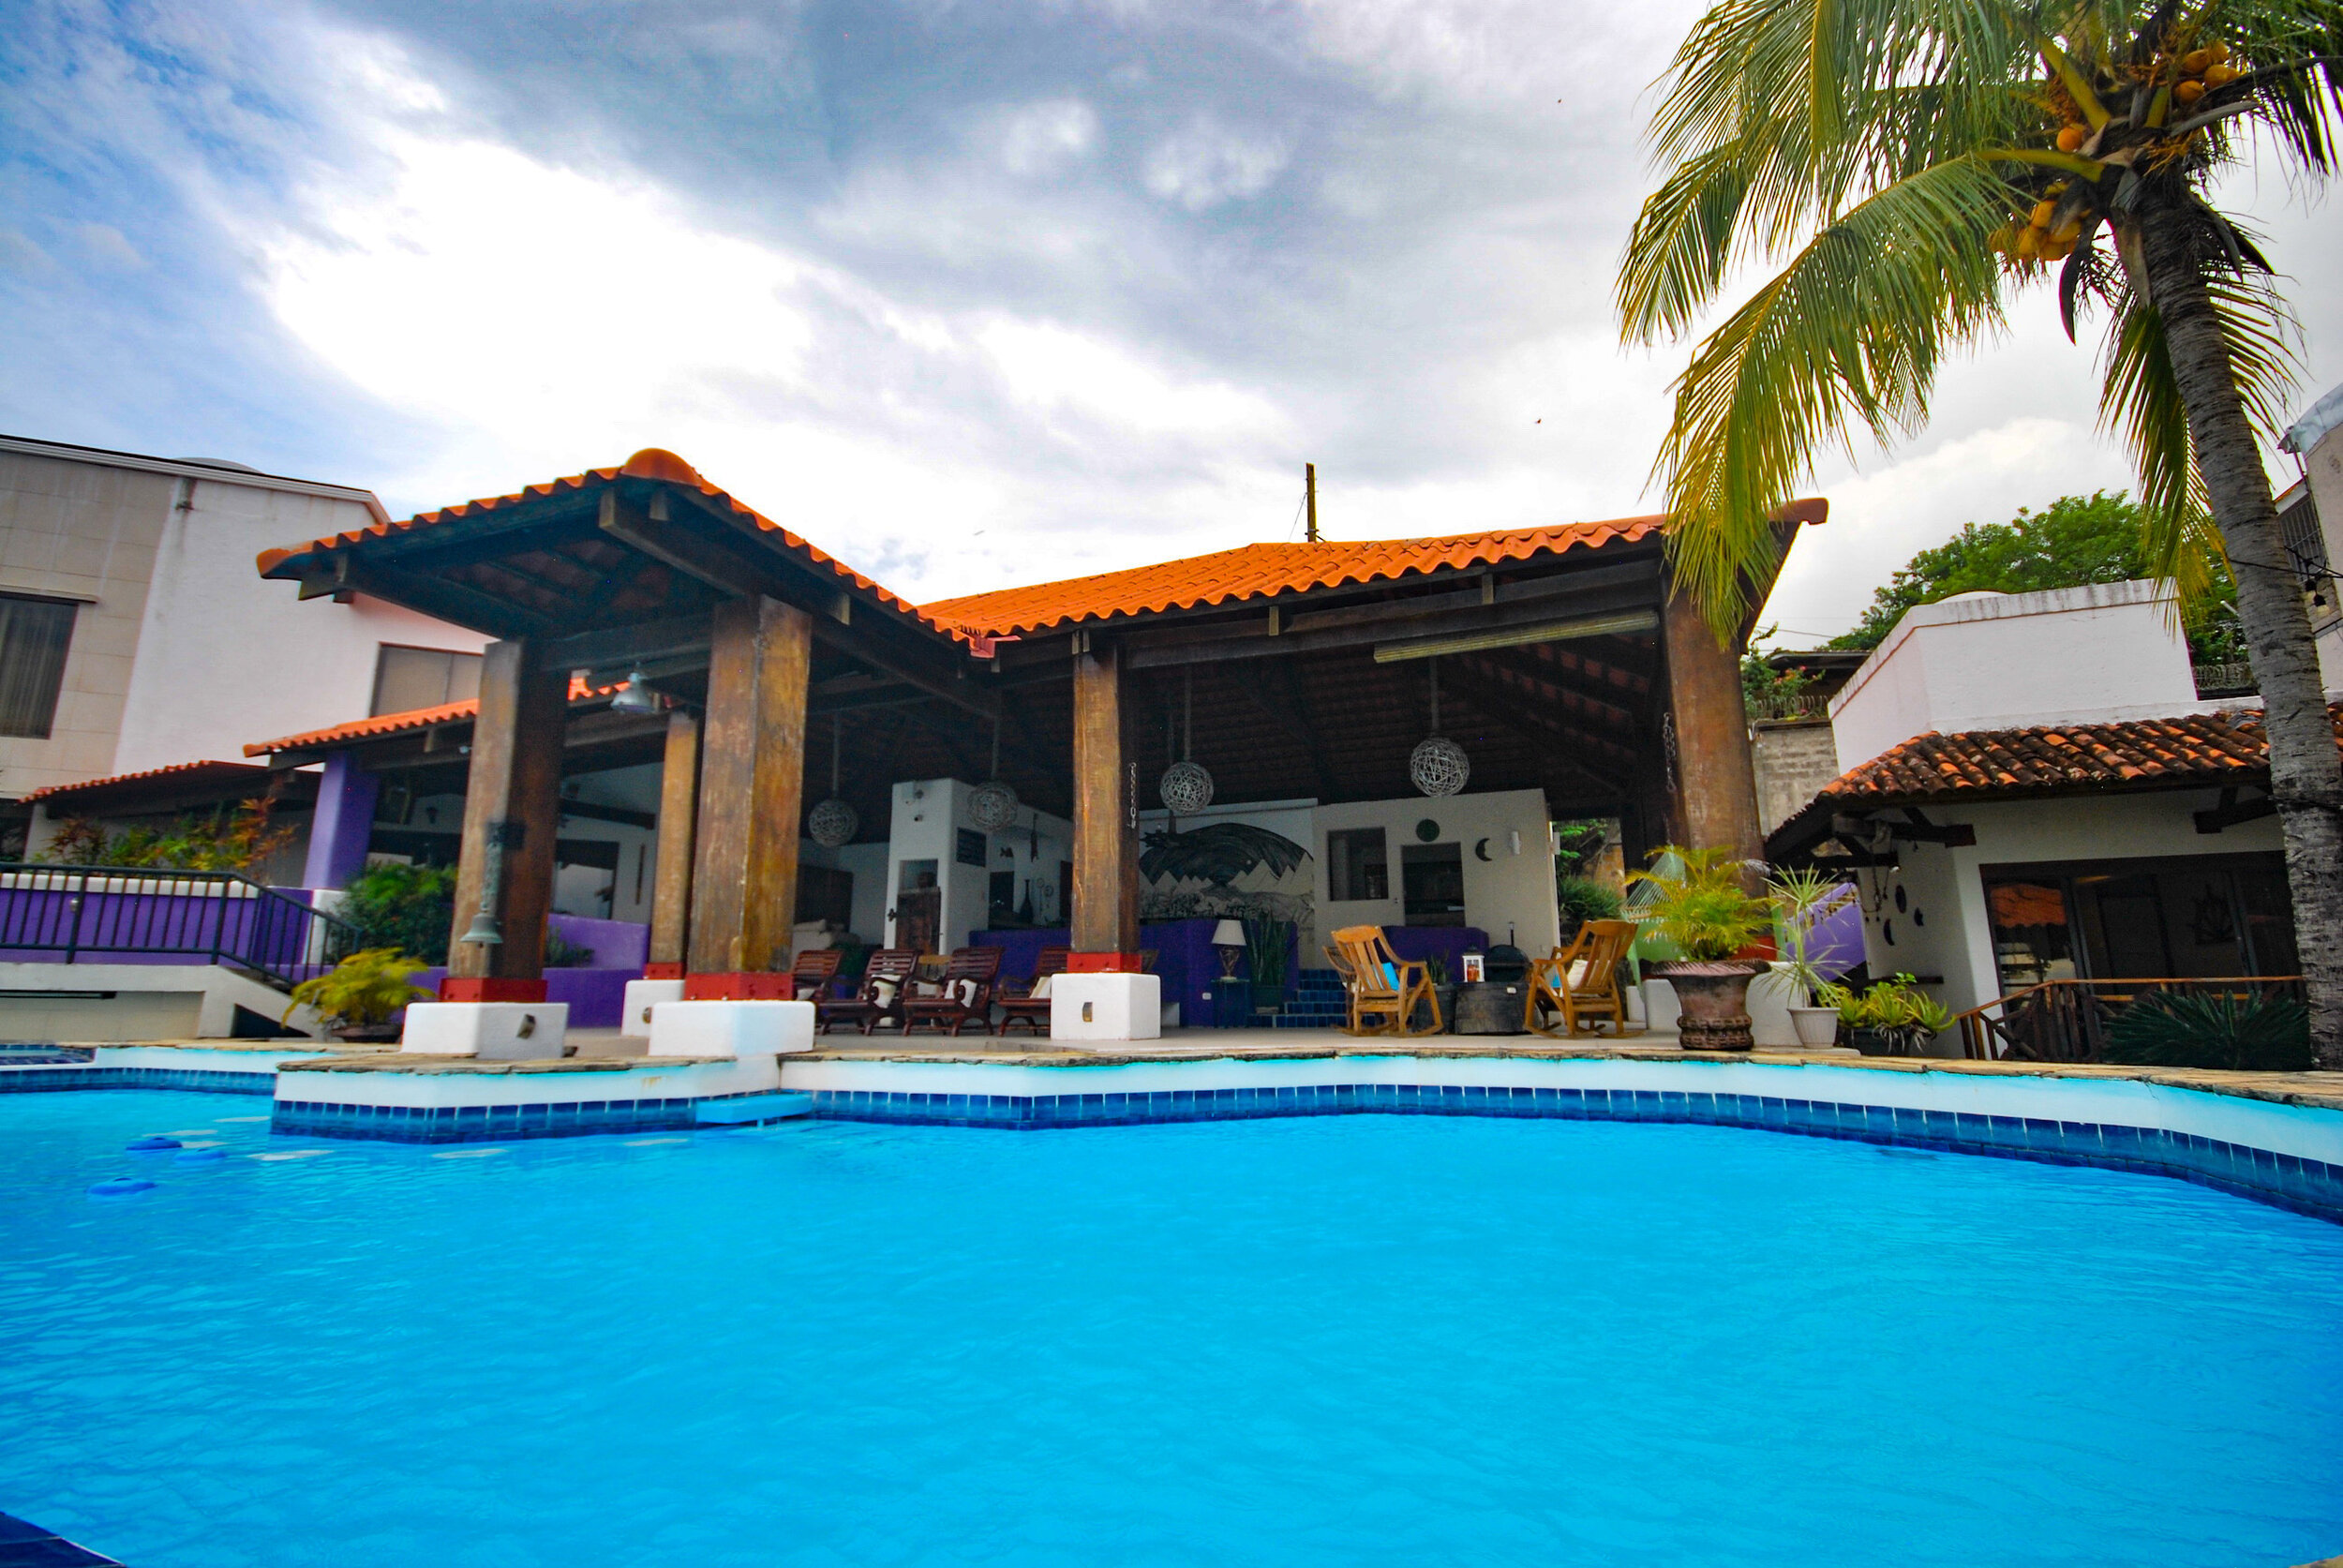 Hotel Resort For Sale San Juan Del Sur Nicaragua 9.JPEG